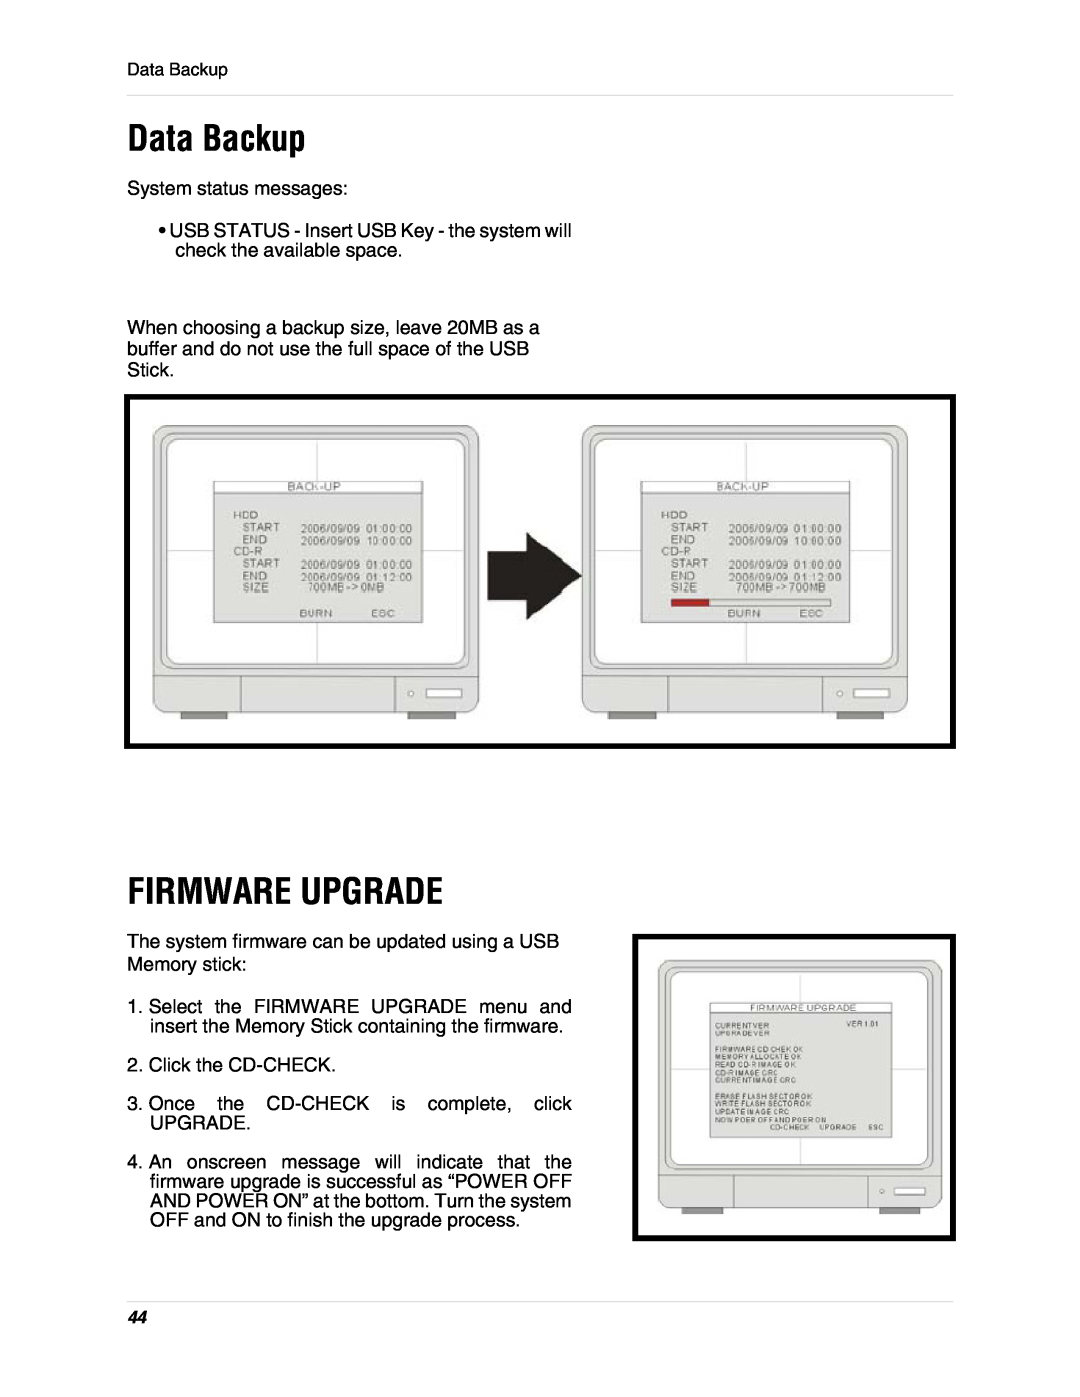 LOREX Technology L15D400 instruction manual Data Backup, Firmware Upgrade 